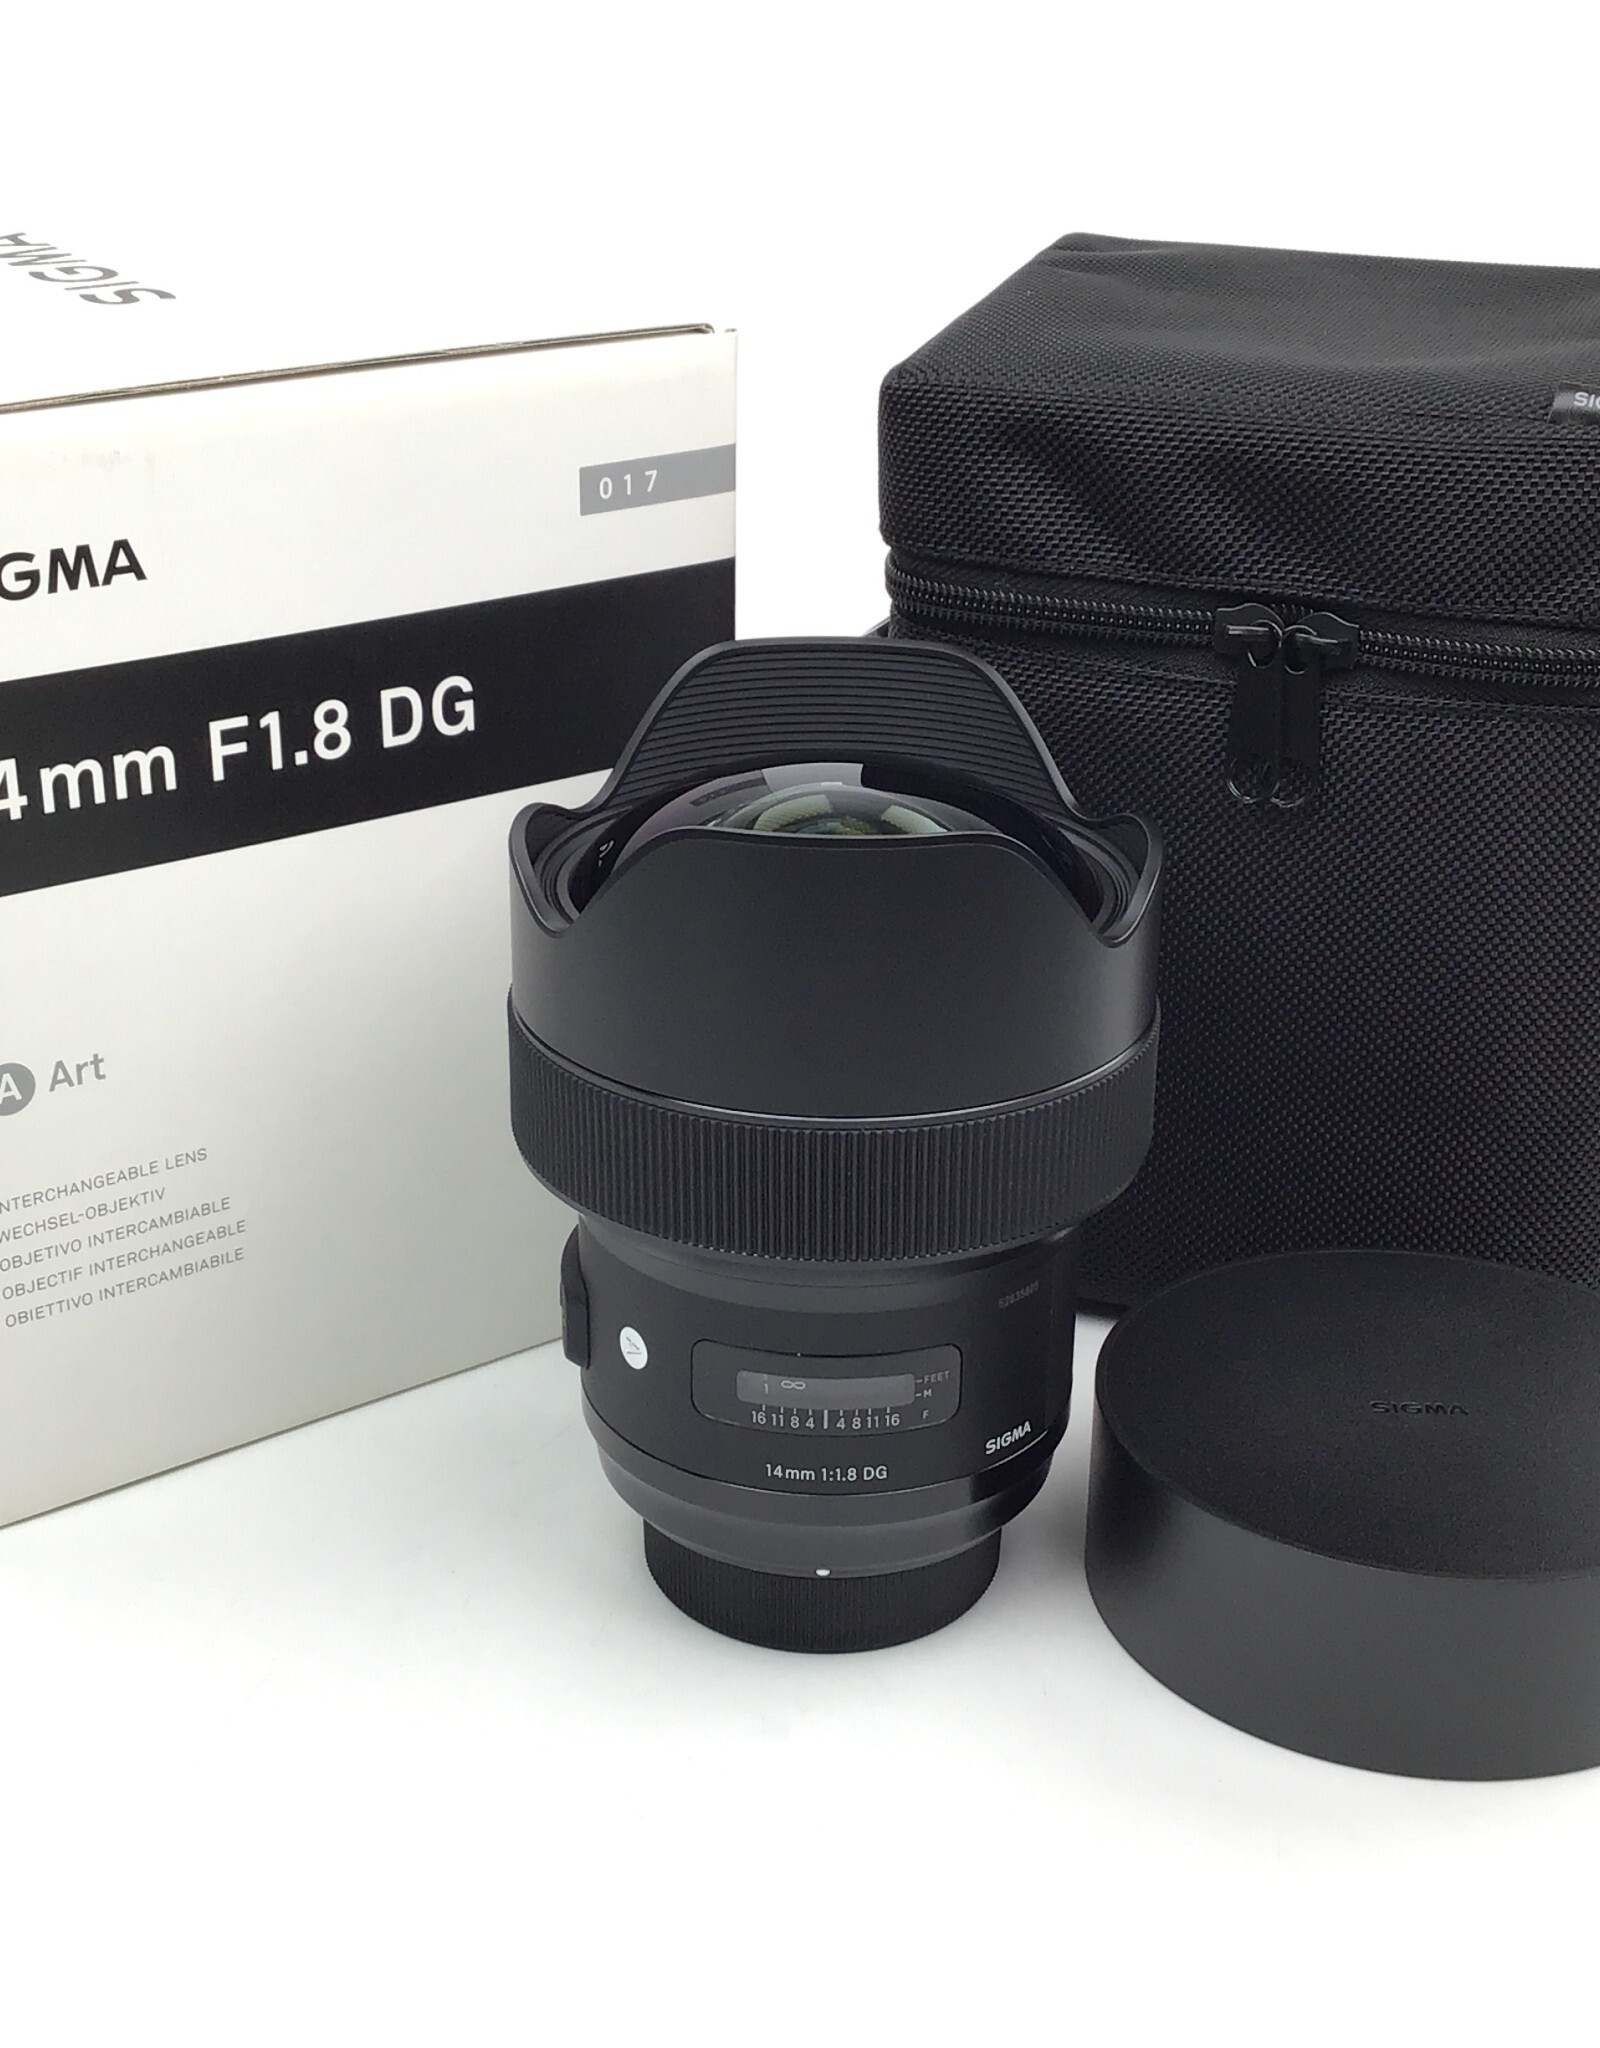 SIGMA Sigma Art 14mm f1.8 DG Lens for Nikon F Used LN